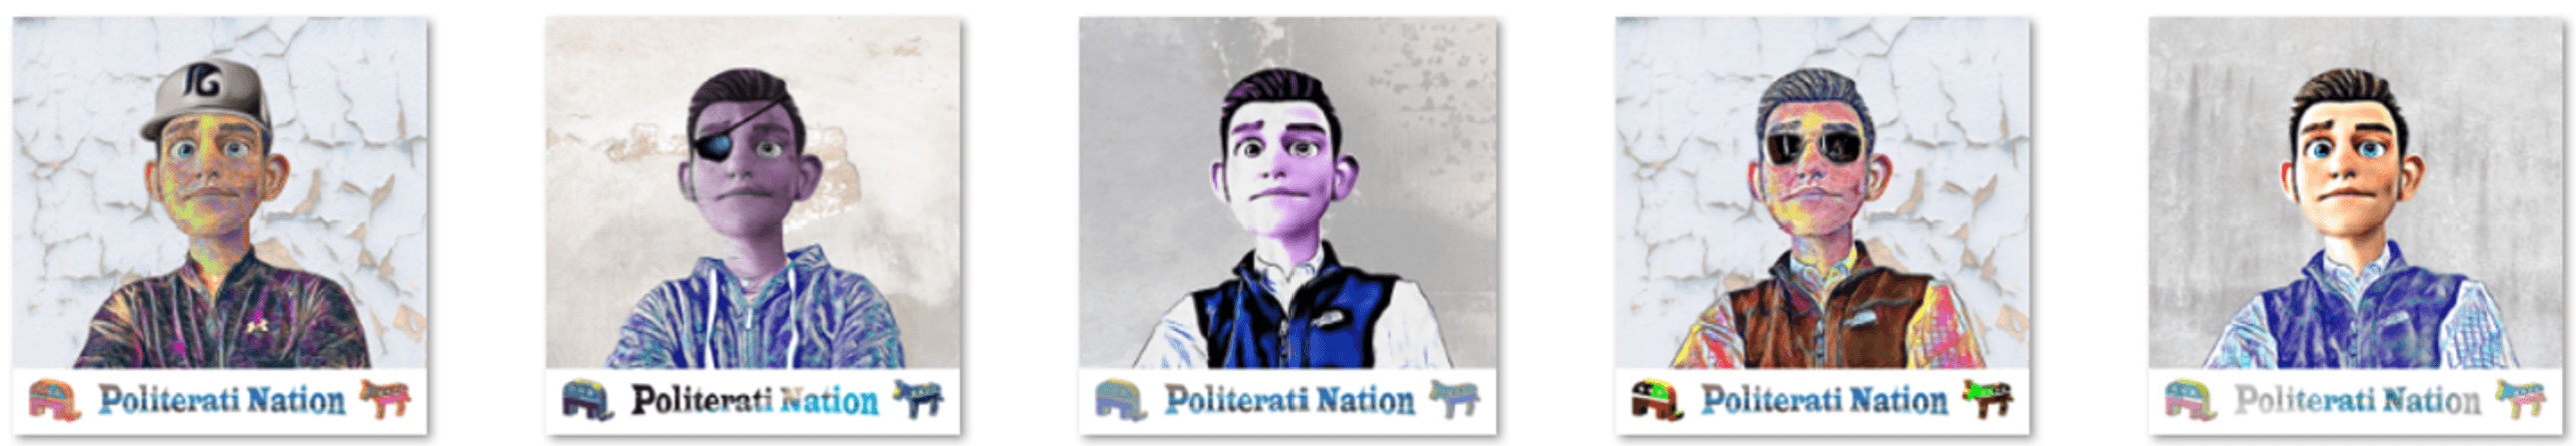 PoliteratiNation banner